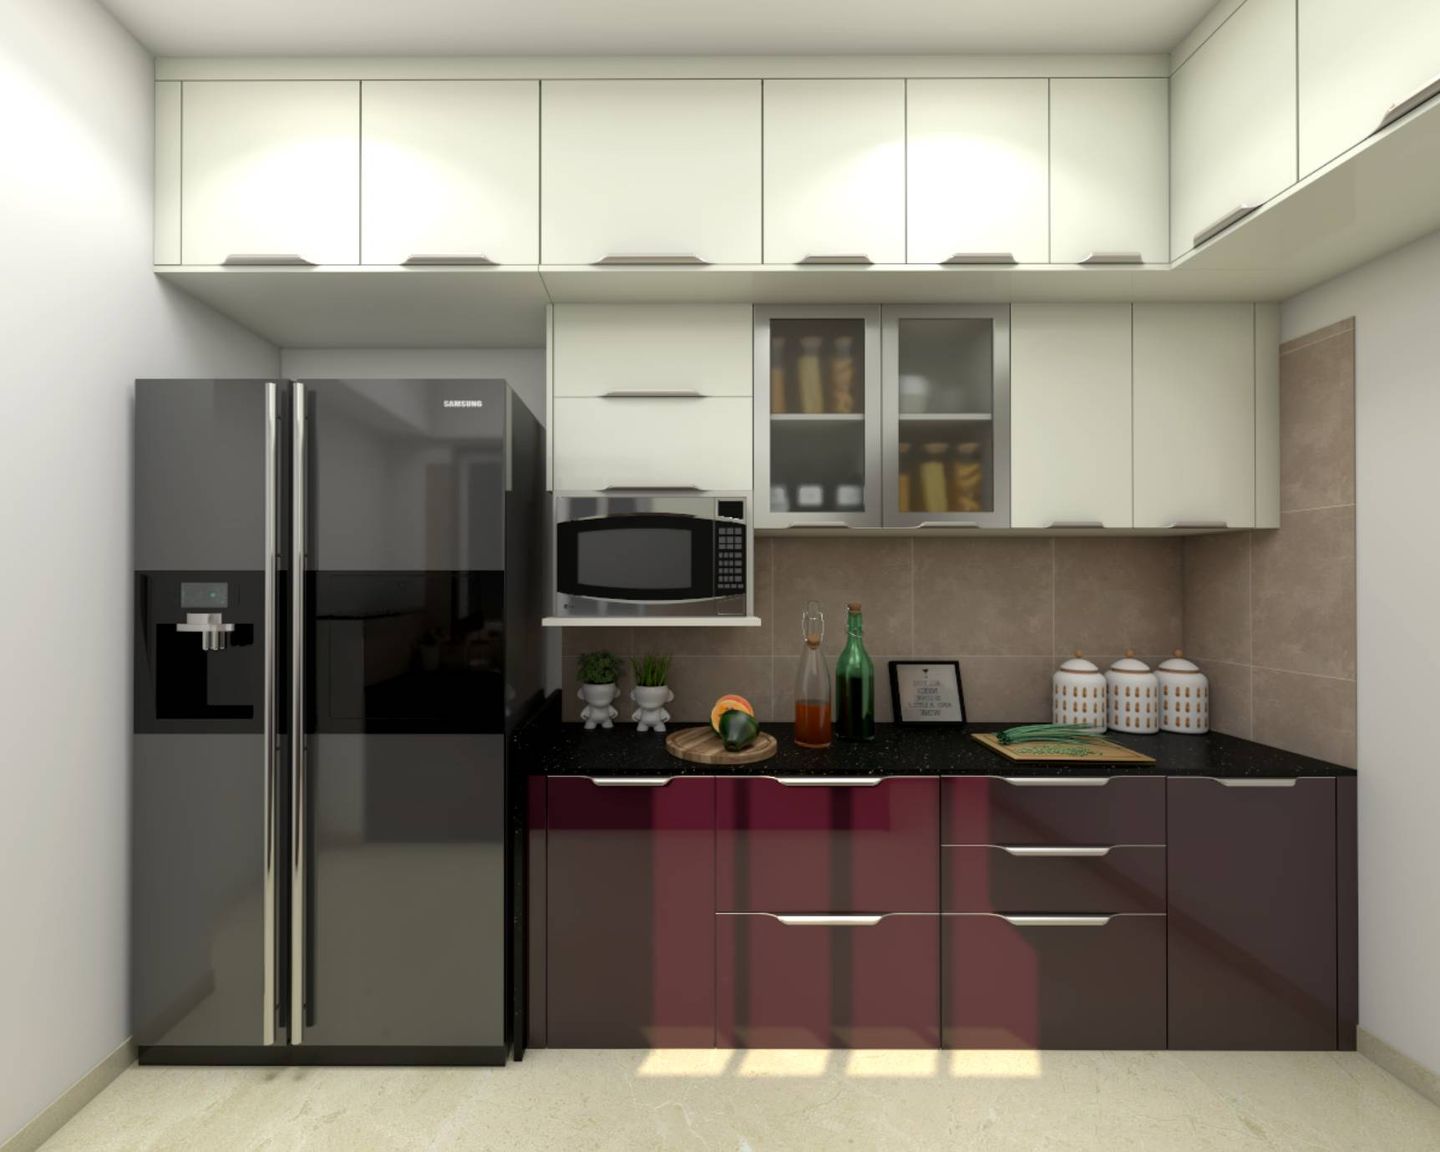 Kitchen Design With Dado Tiles - Livspace